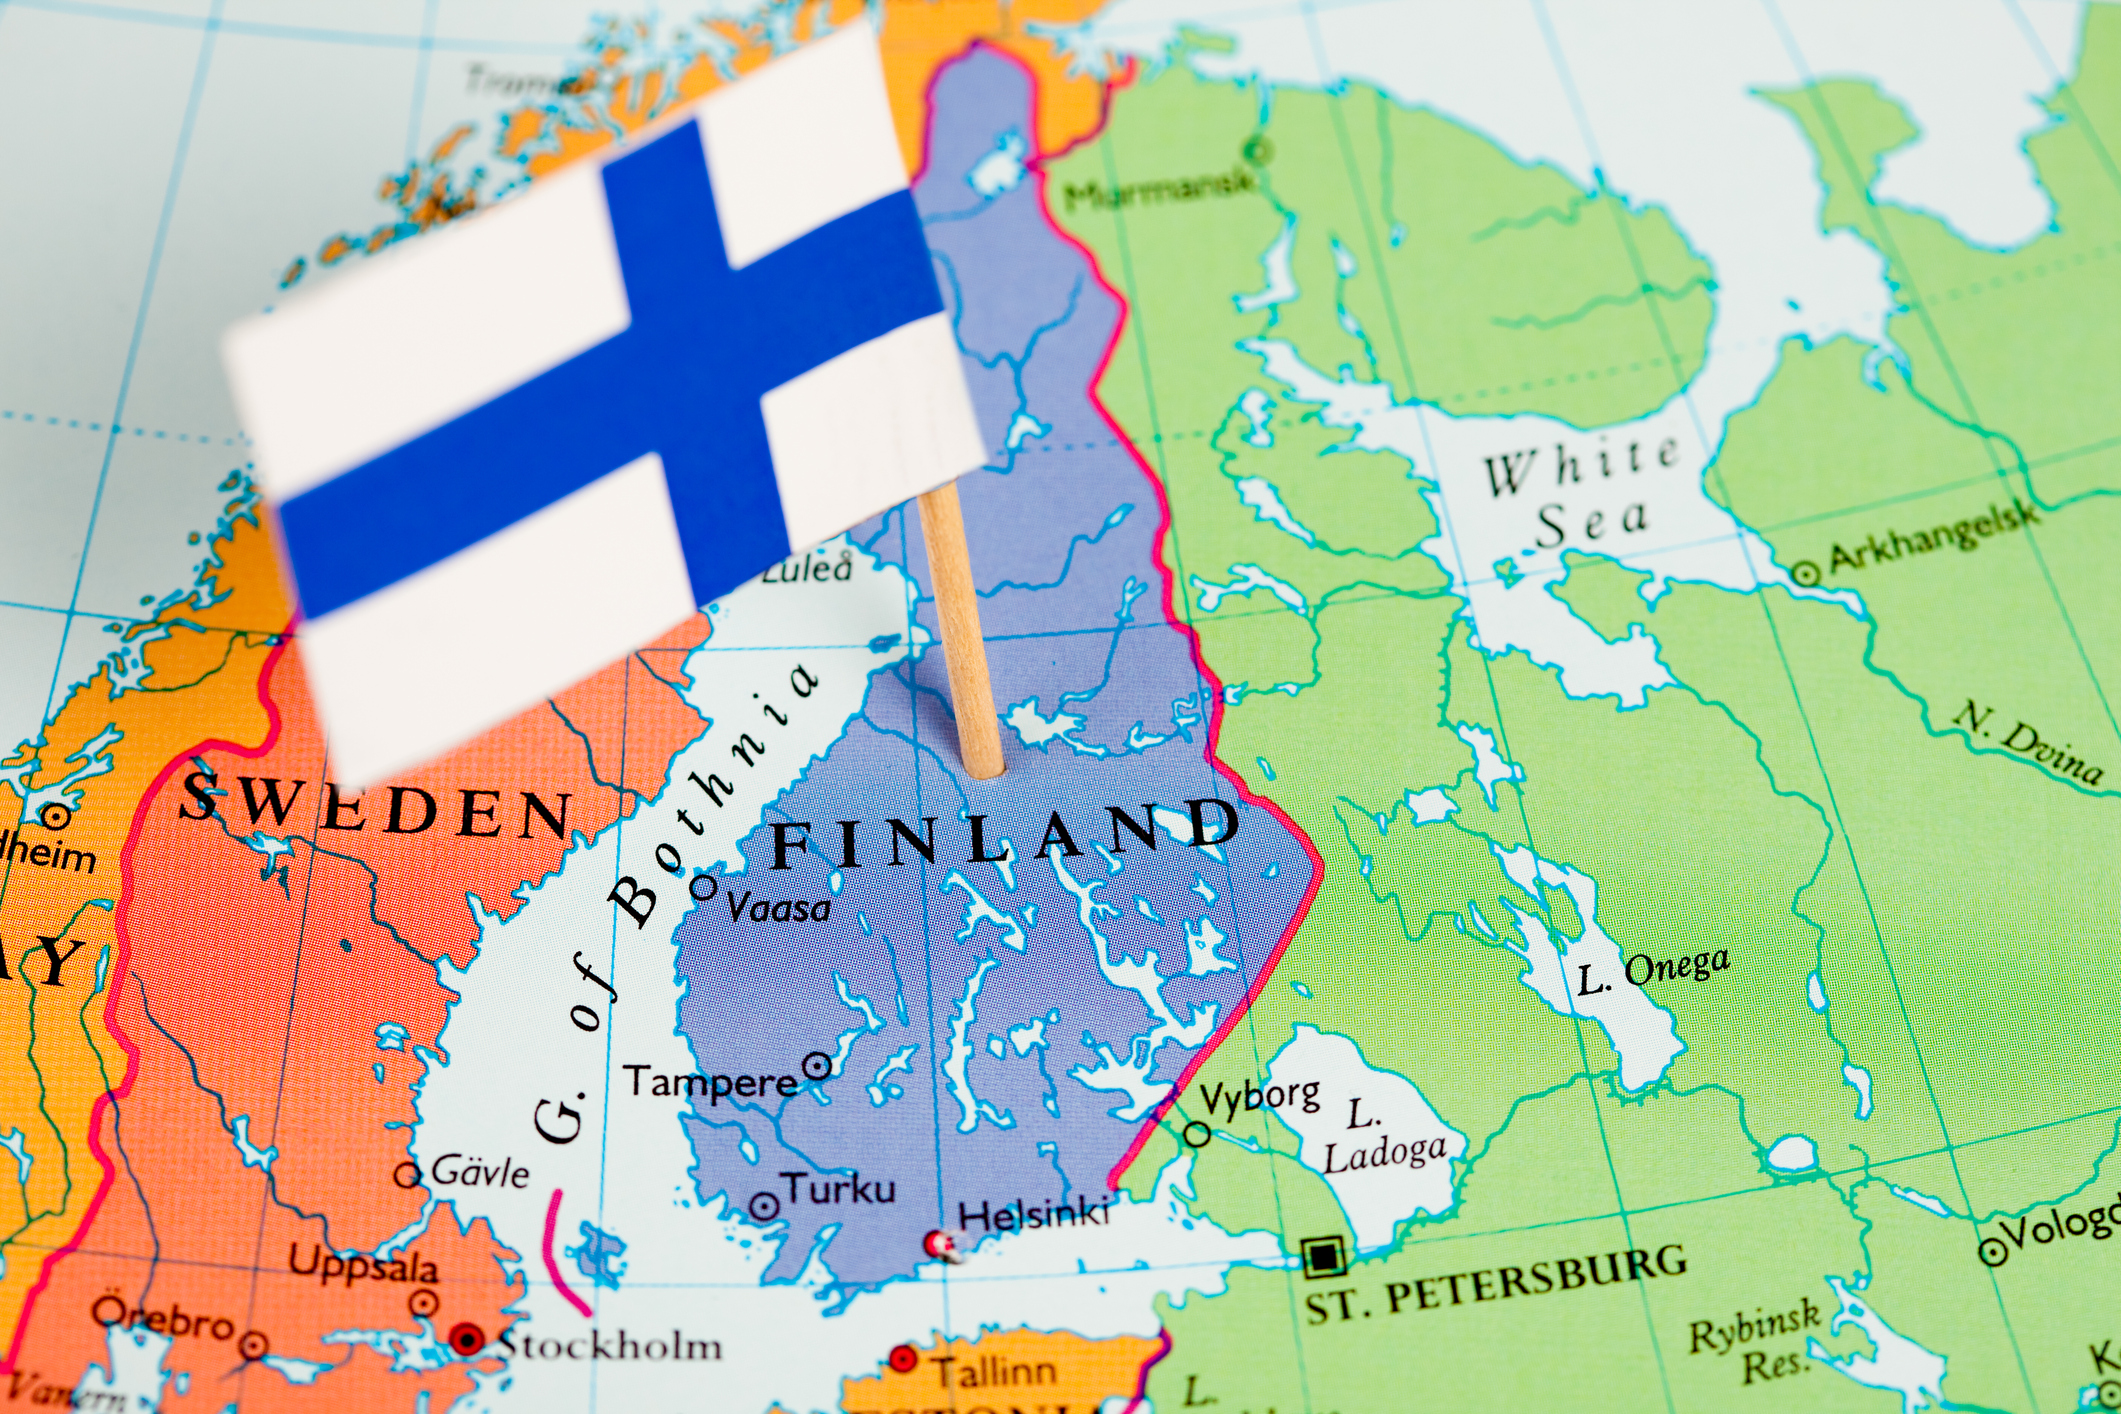 Финляндия граничит с россией. Граница России и Финляндии на карте. Расположение Финляндии на карте. Географическое положение Финляндии на карте.